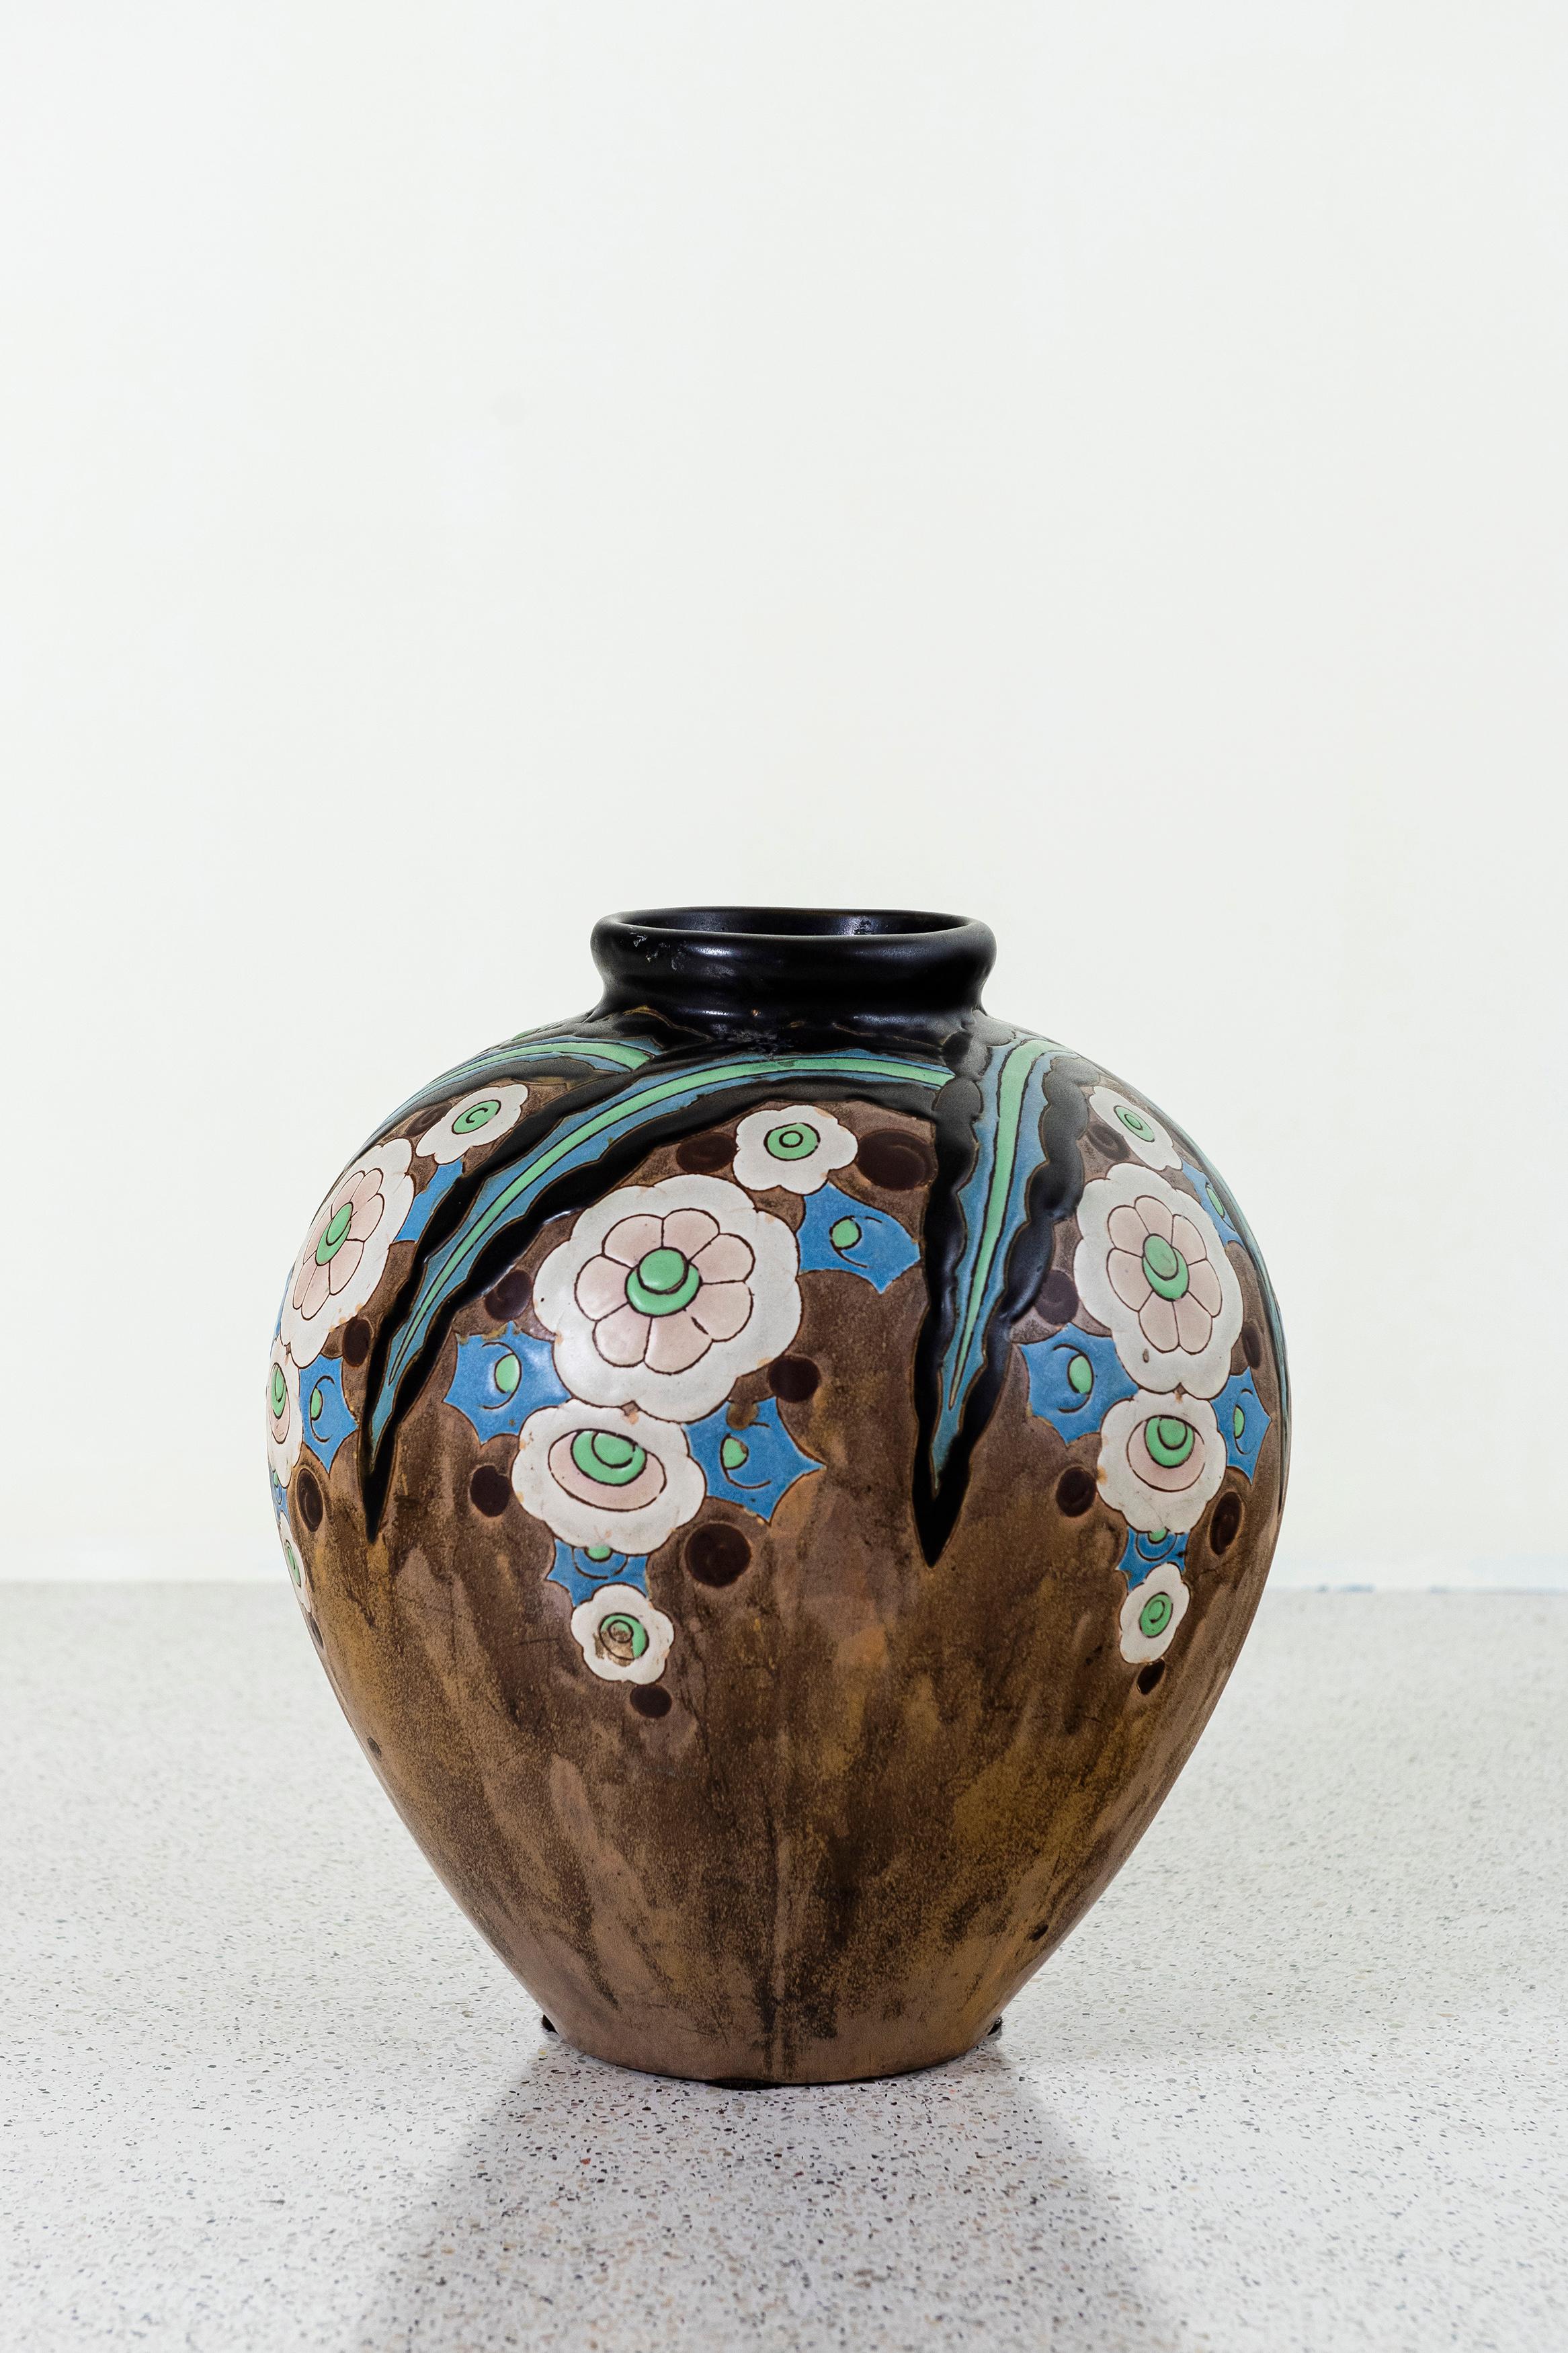 Gres Keramis flower vase, Belgium, circa 1920.
Model D 1211.